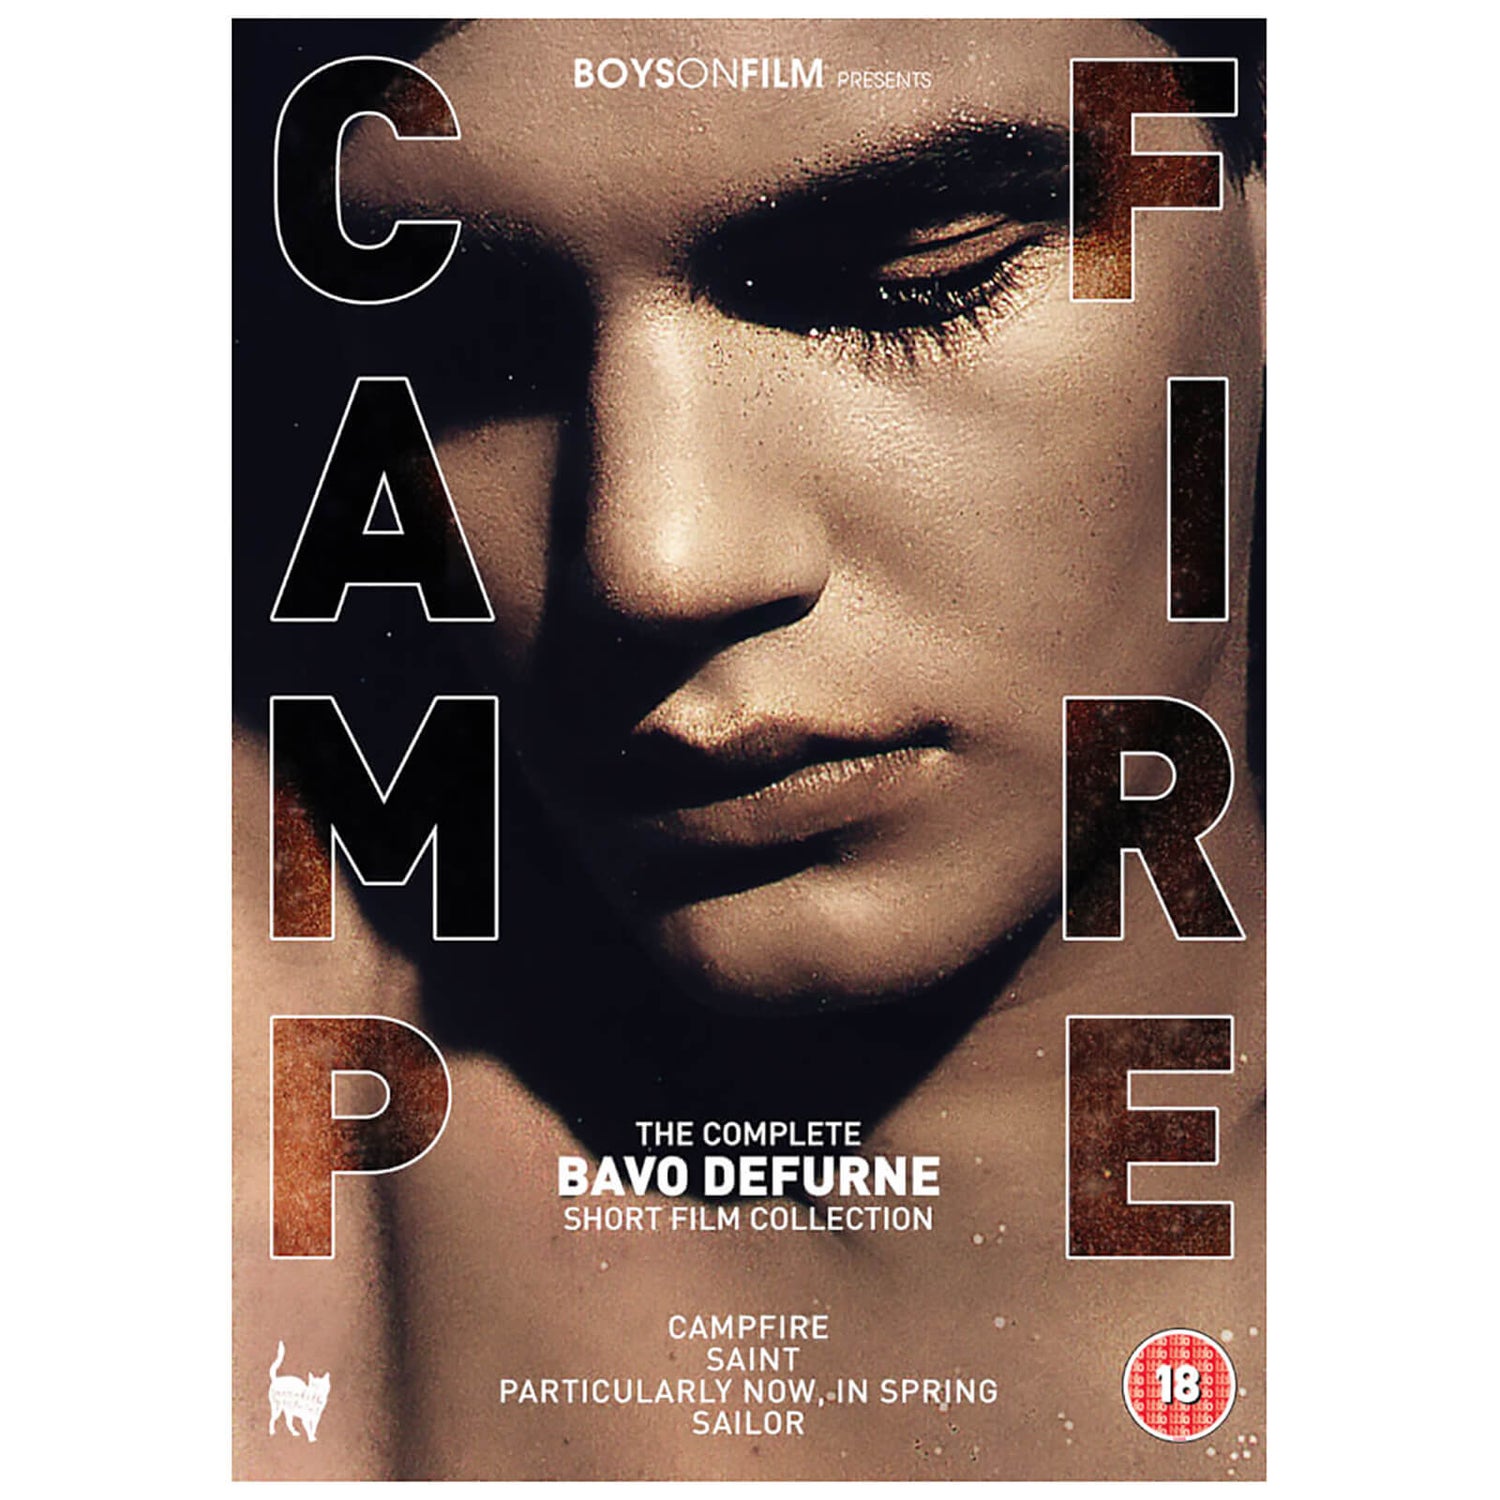 Boys On Film Presents: Campfire